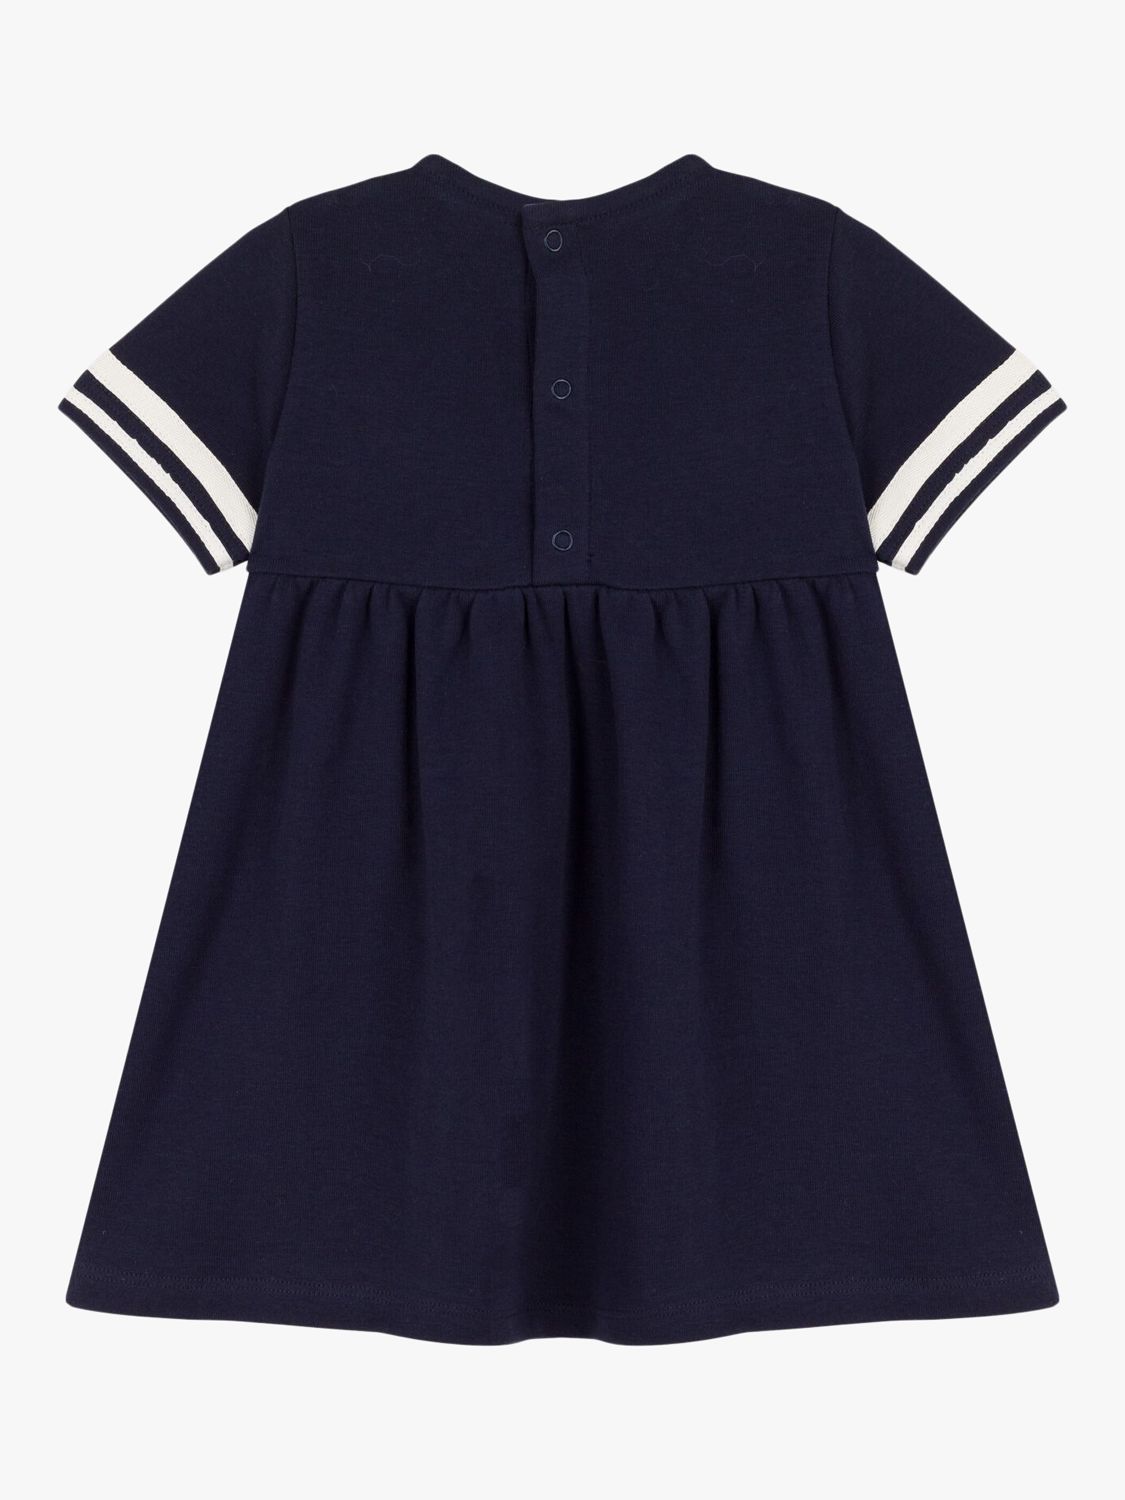 Petit Bateau Baby Organic Cotton Sailor Dress, Smoked Blue/White, 3 years